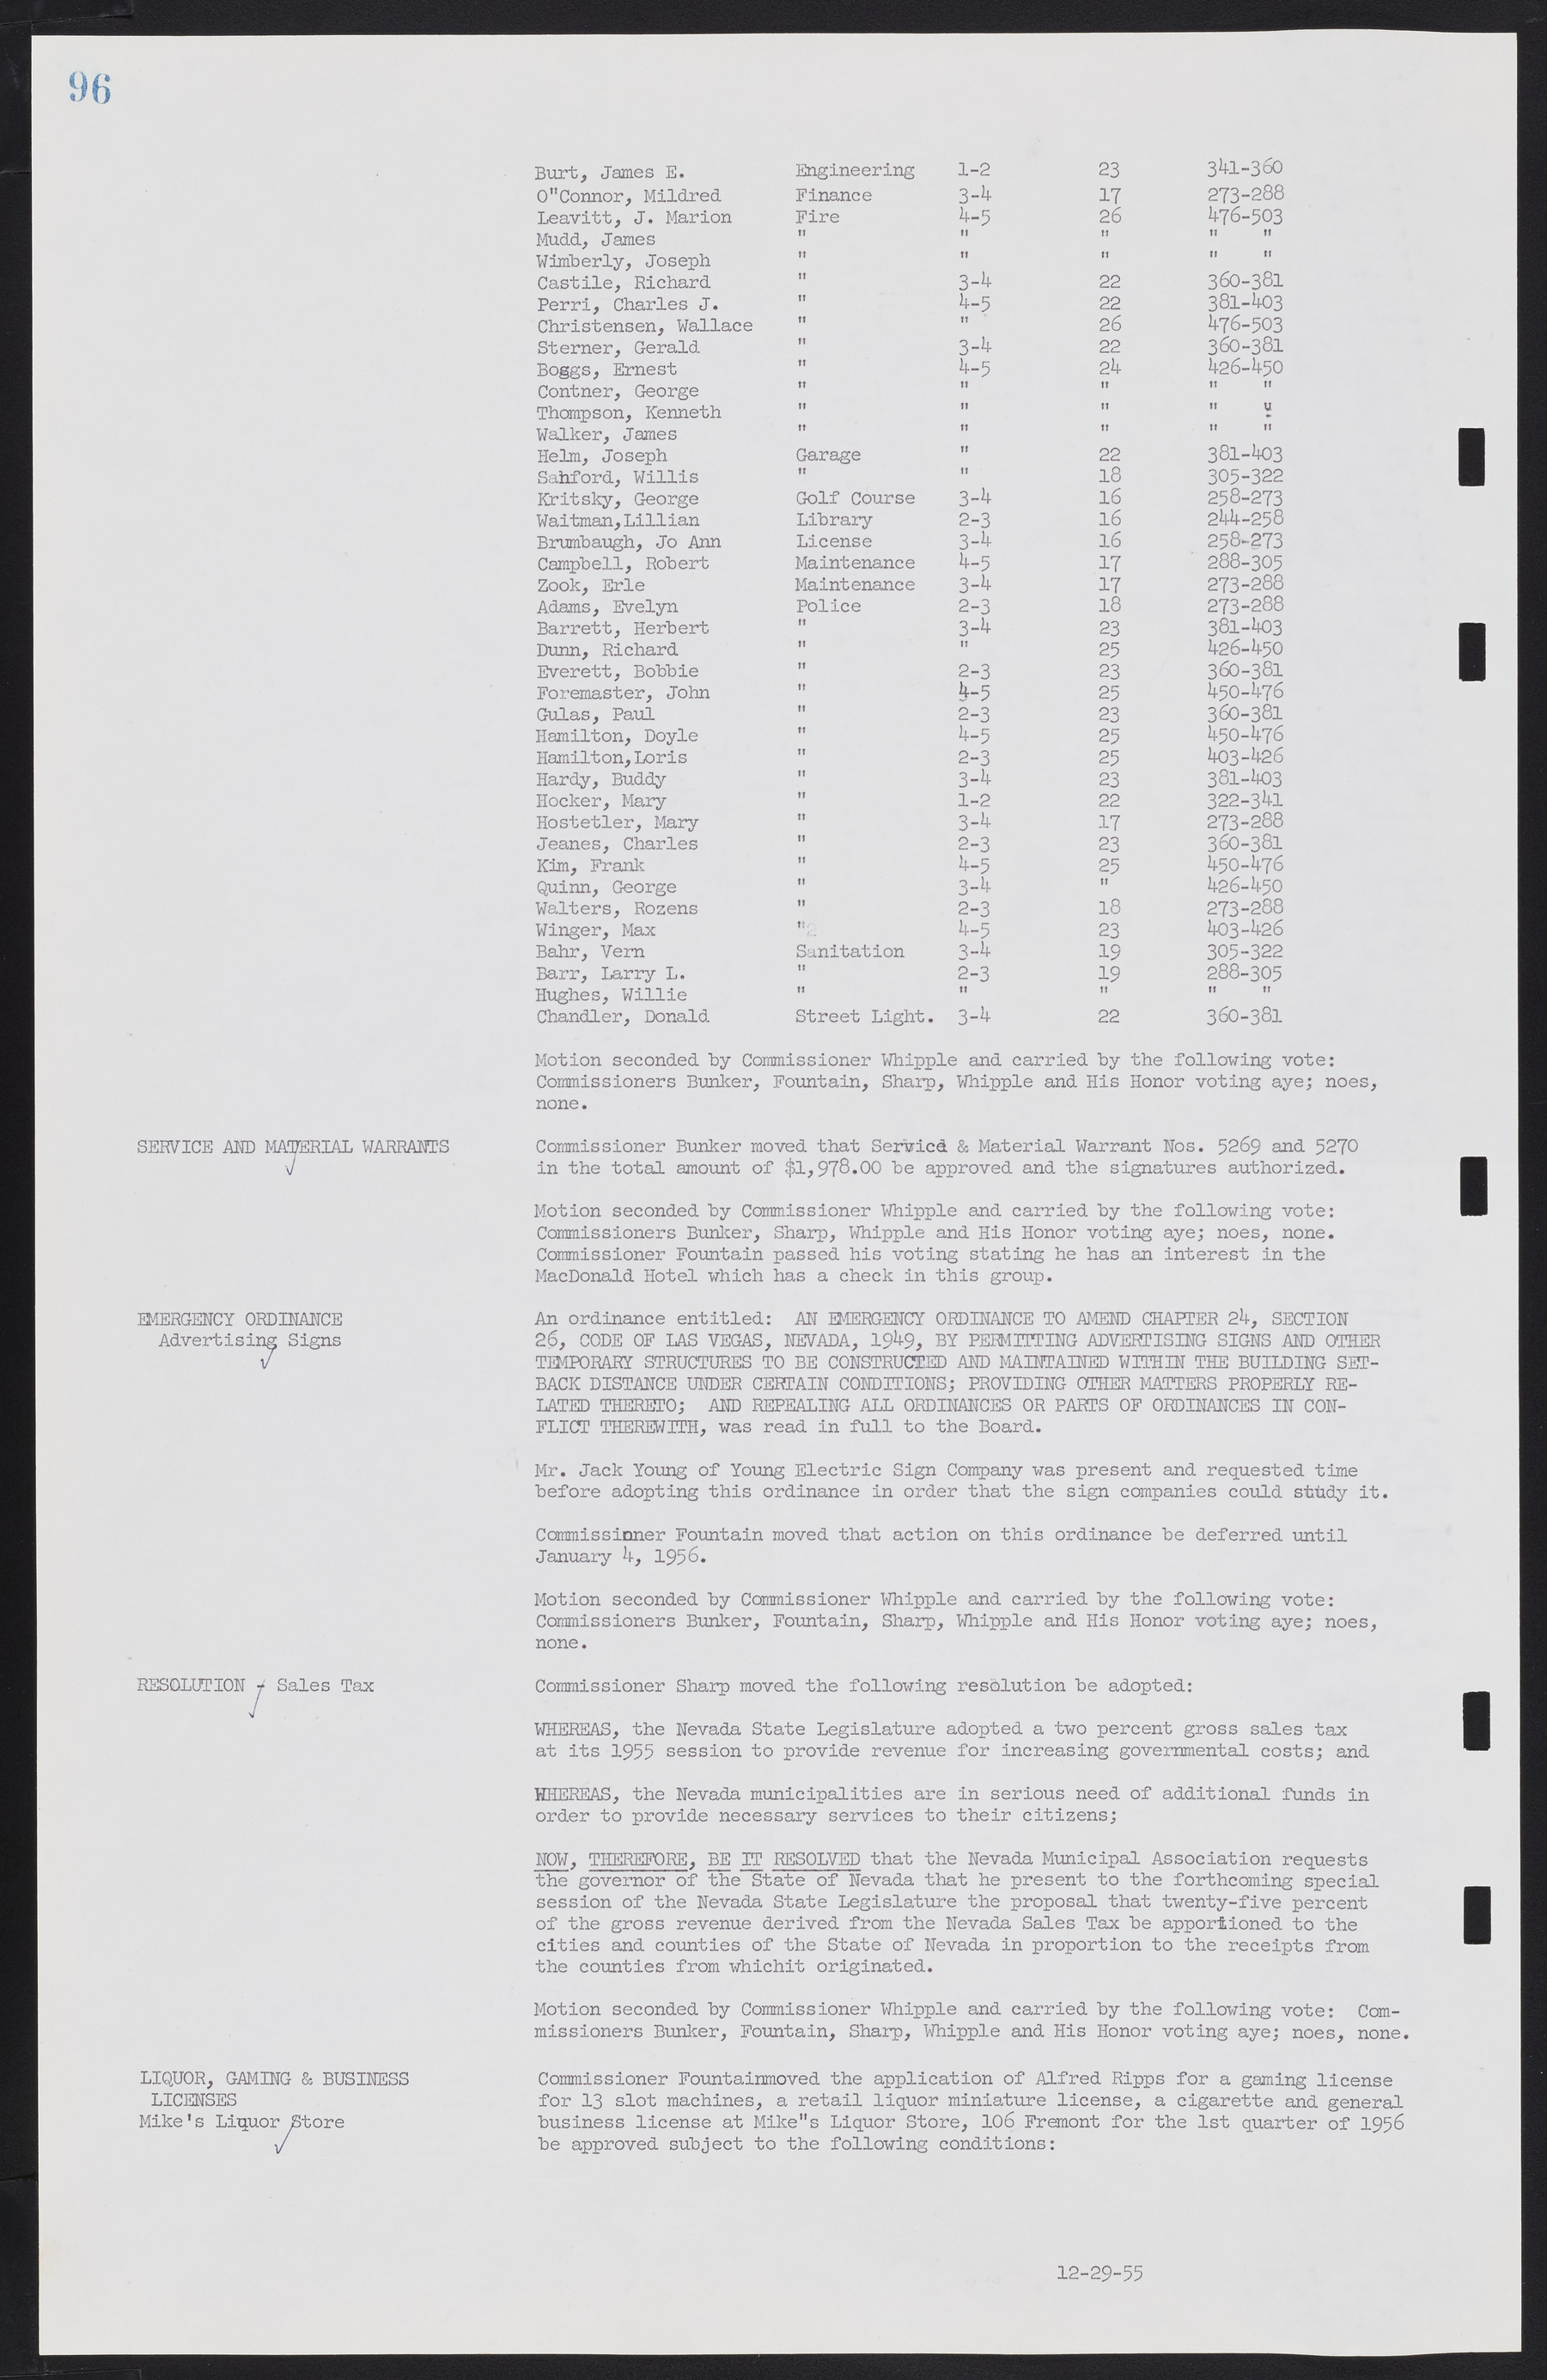 Las Vegas City Commission Minutes, September 21, 1955 to November 20, 1957, lvc000010-106